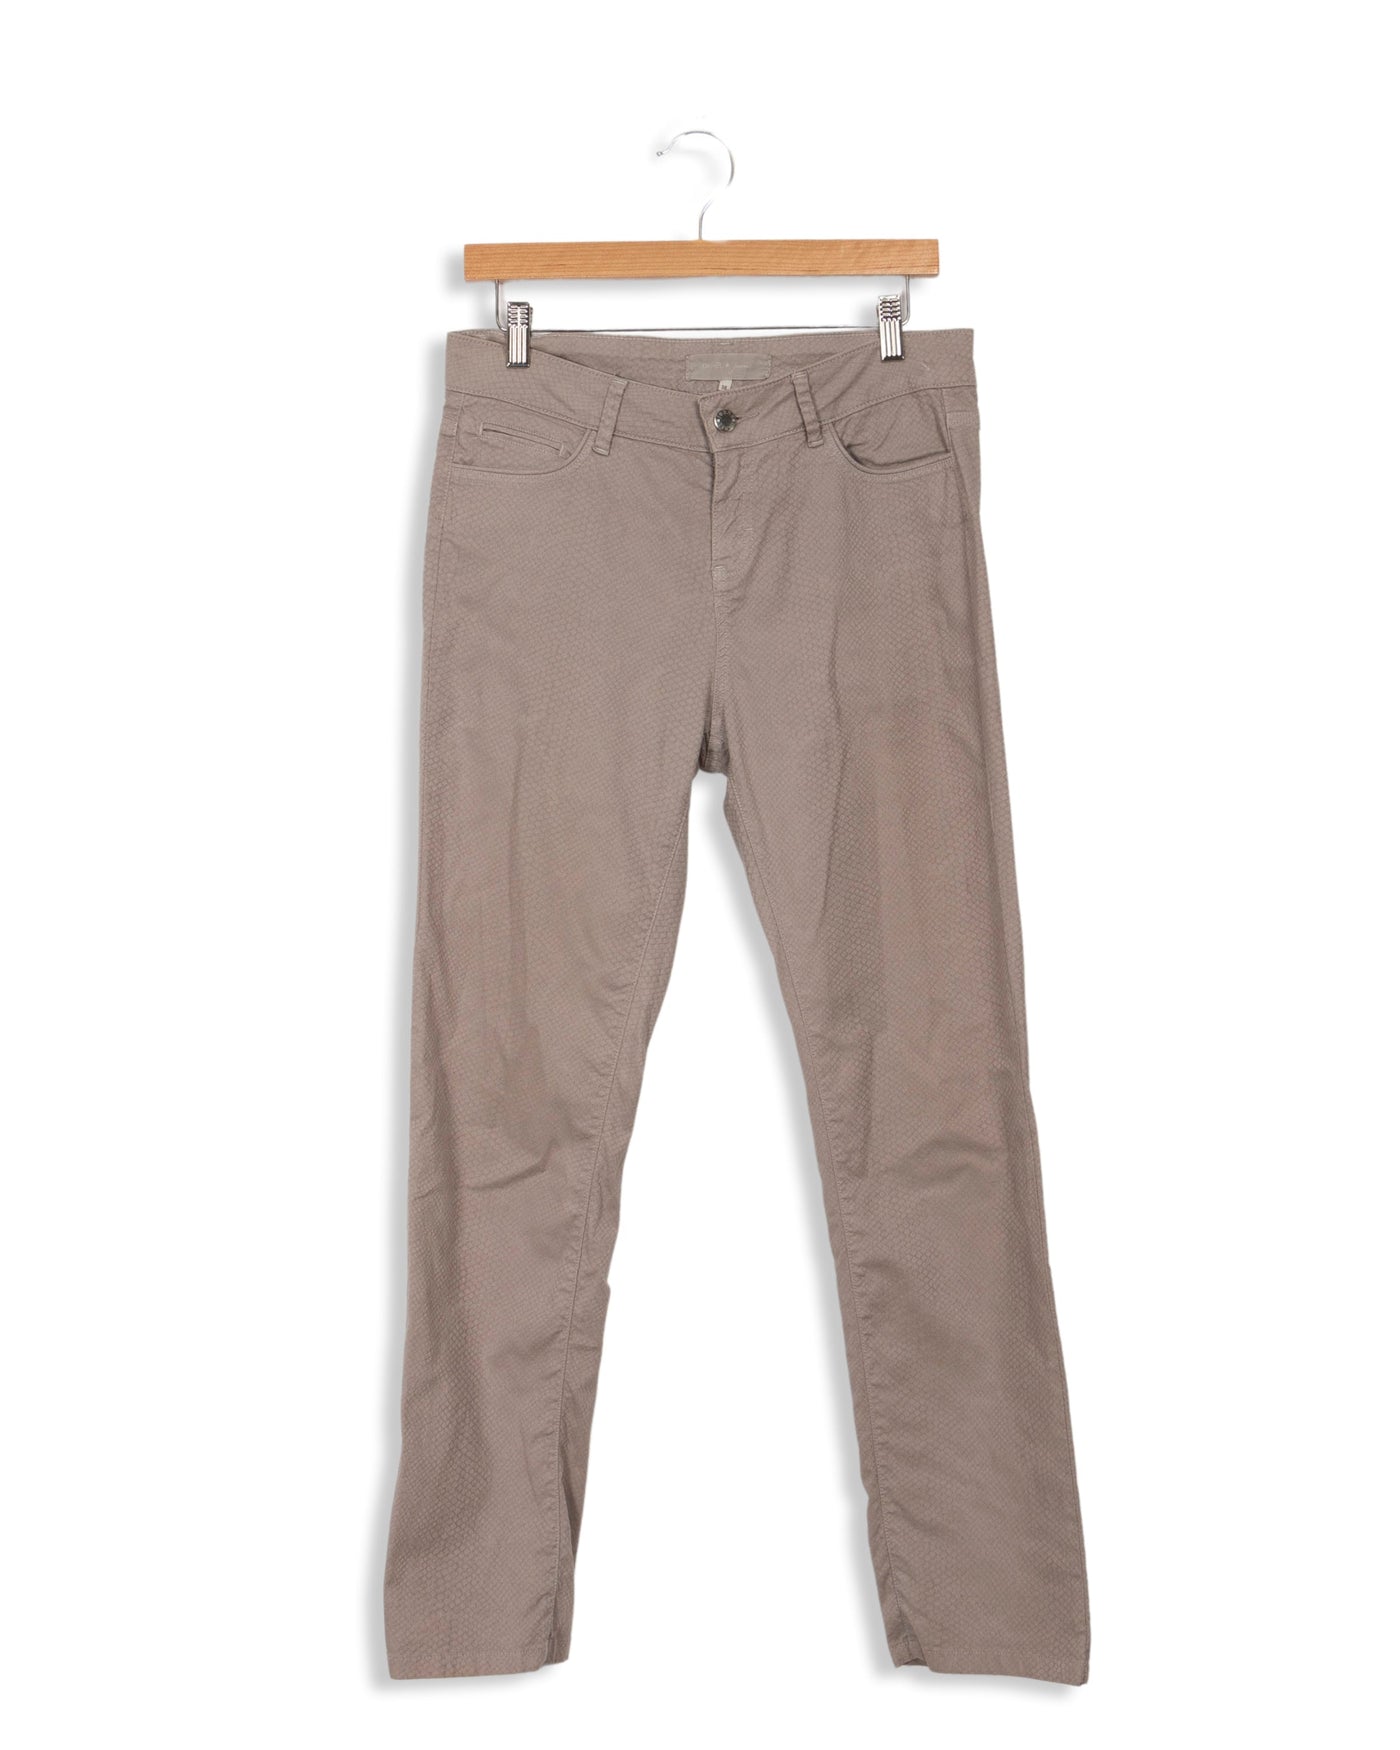 Pantalon gris coupe droite Gerard Darel - 38